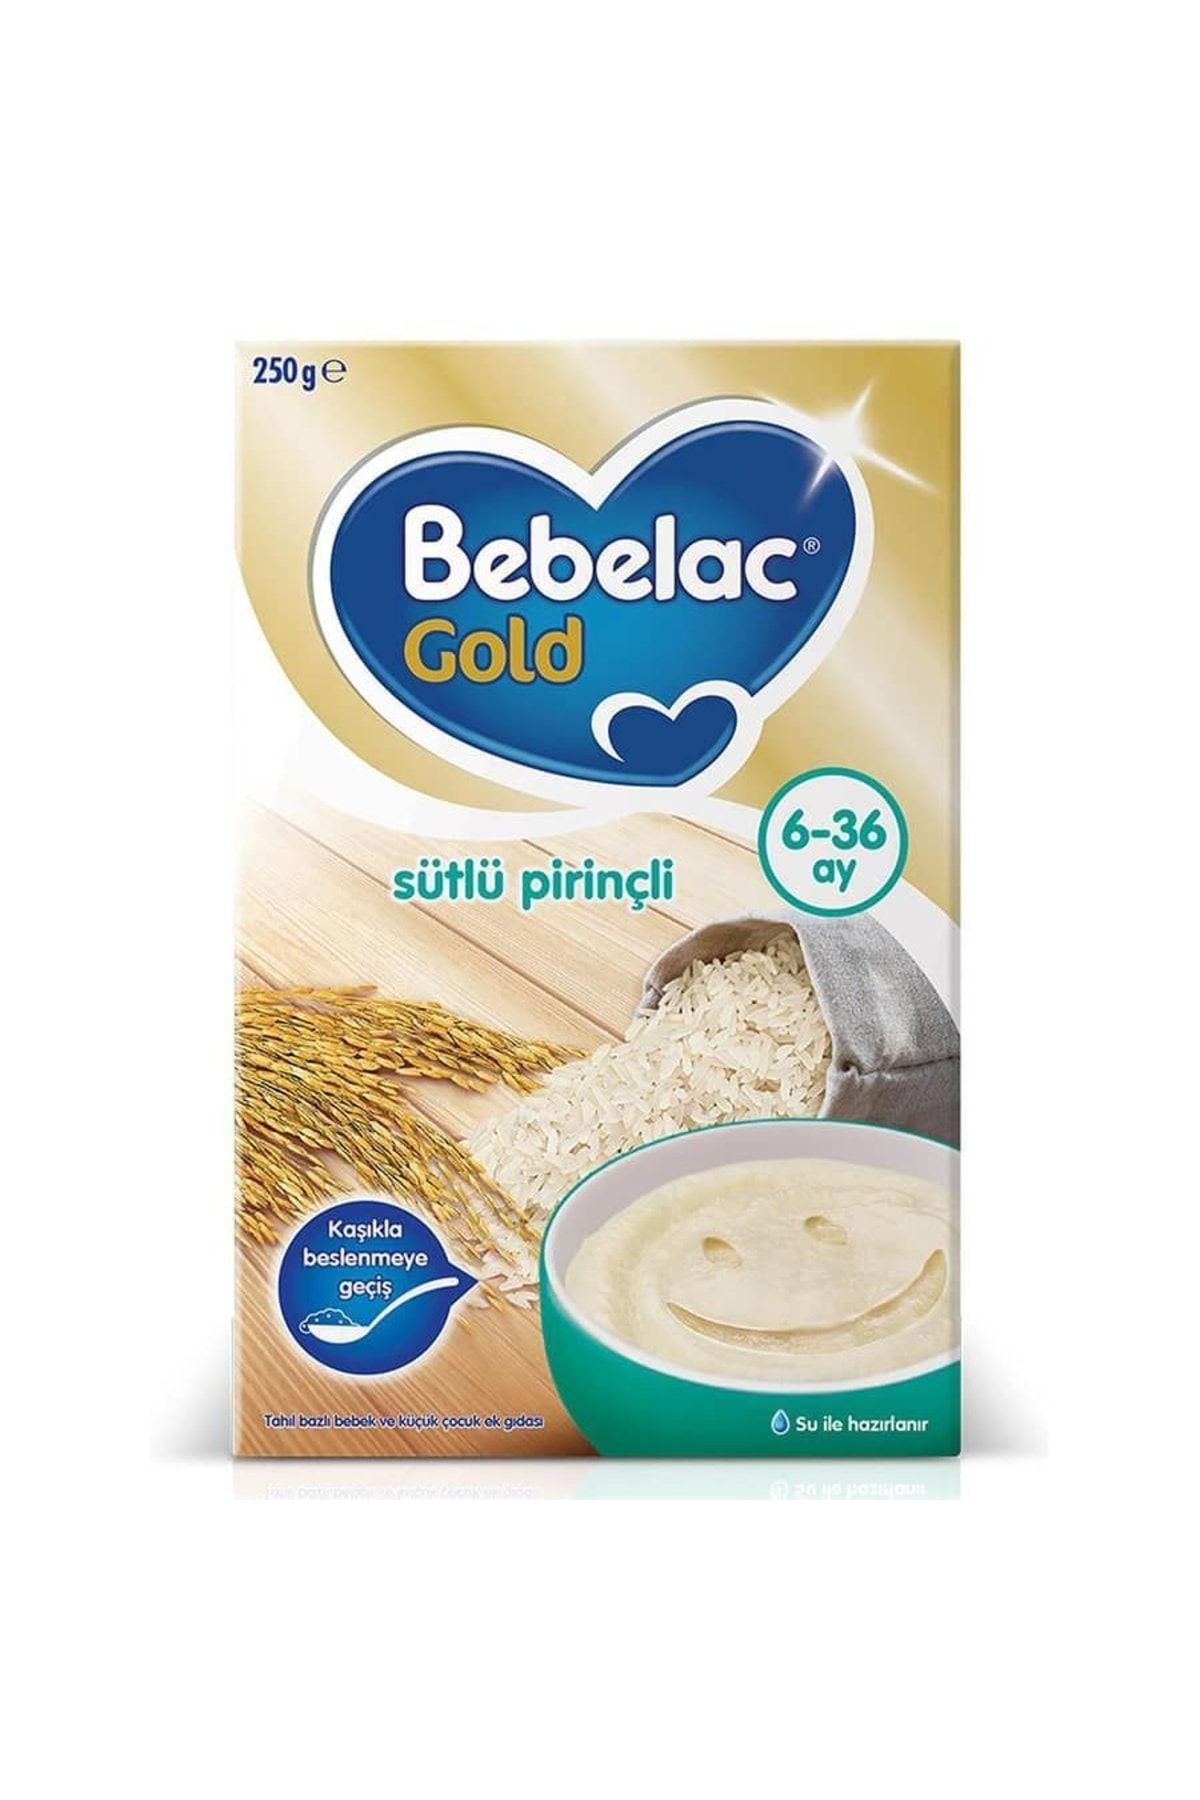 Bebelac (bgt) Gold Sütlü Pirinçli Kaşık Maması 250gr